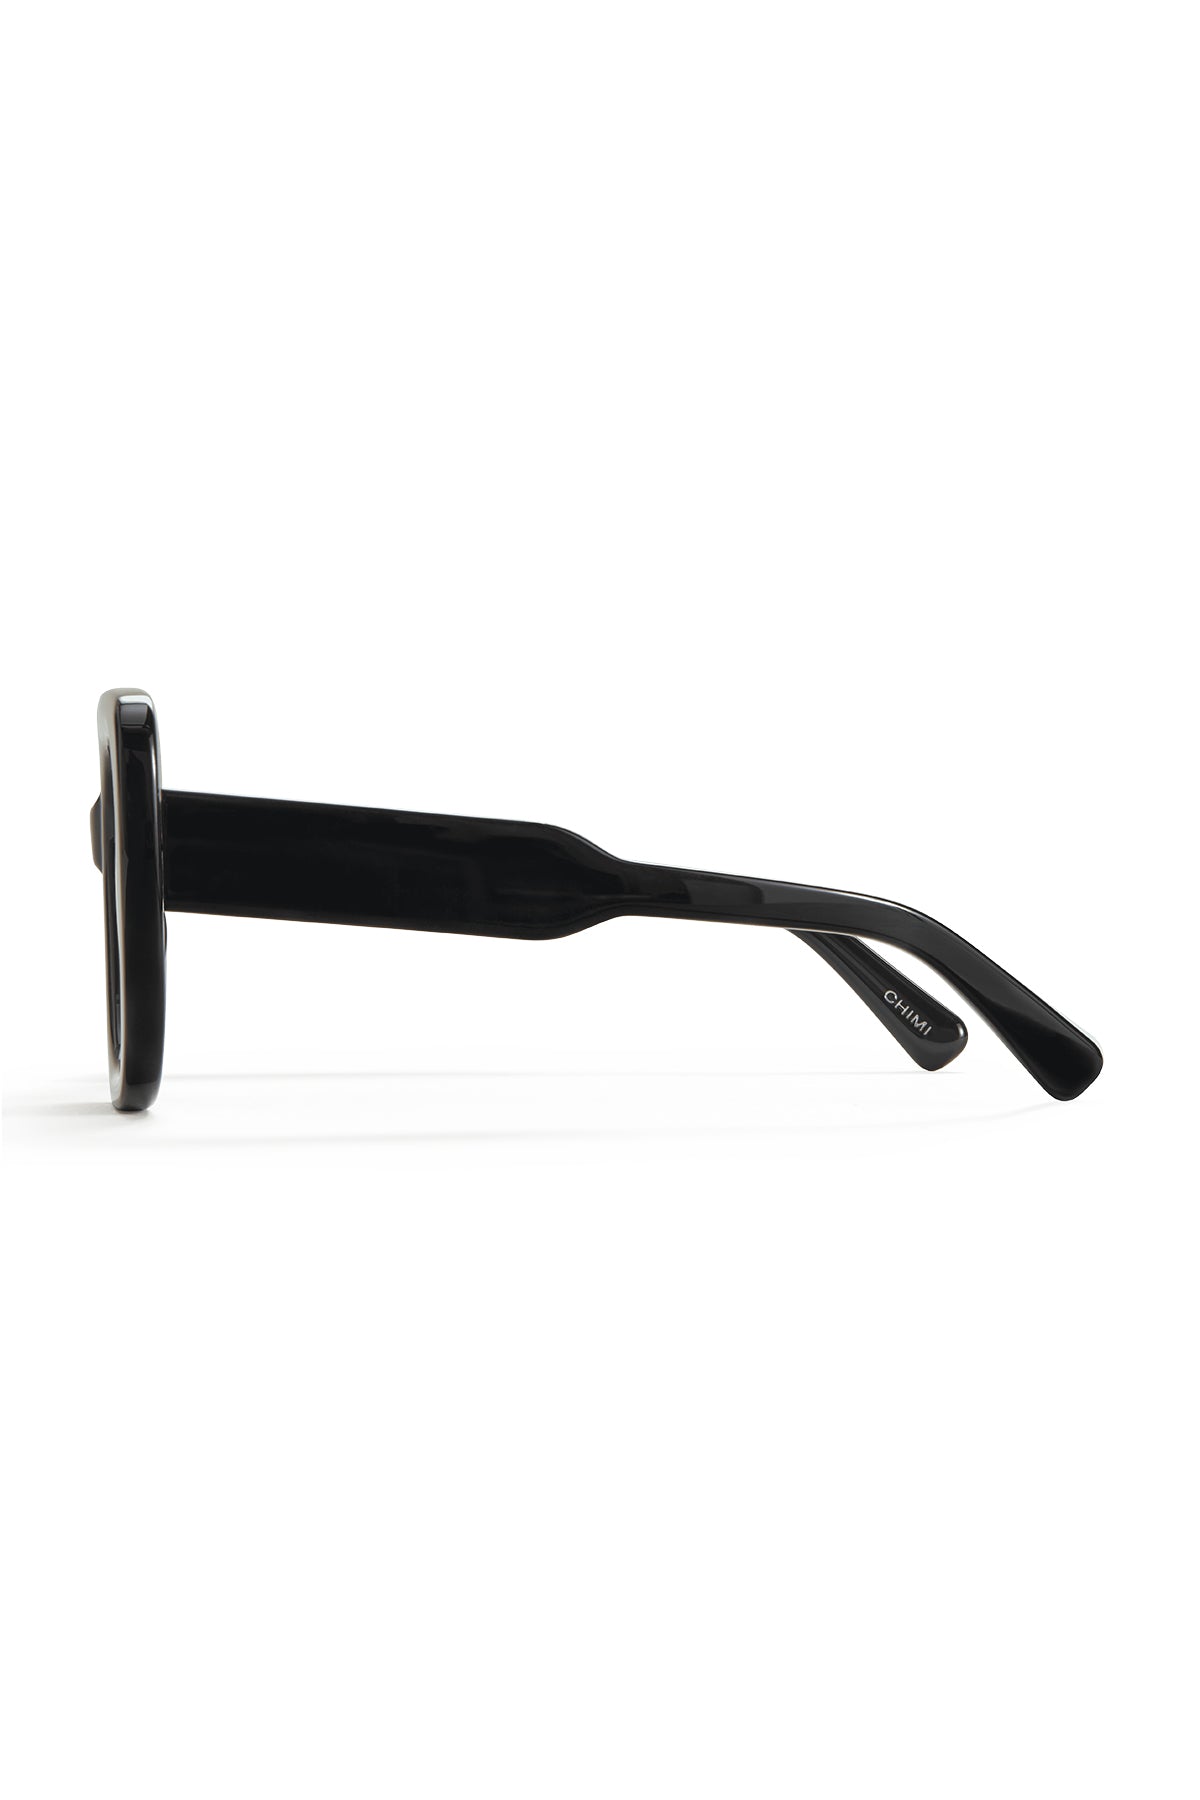   Chimi 10 Sunglasses Black Side 